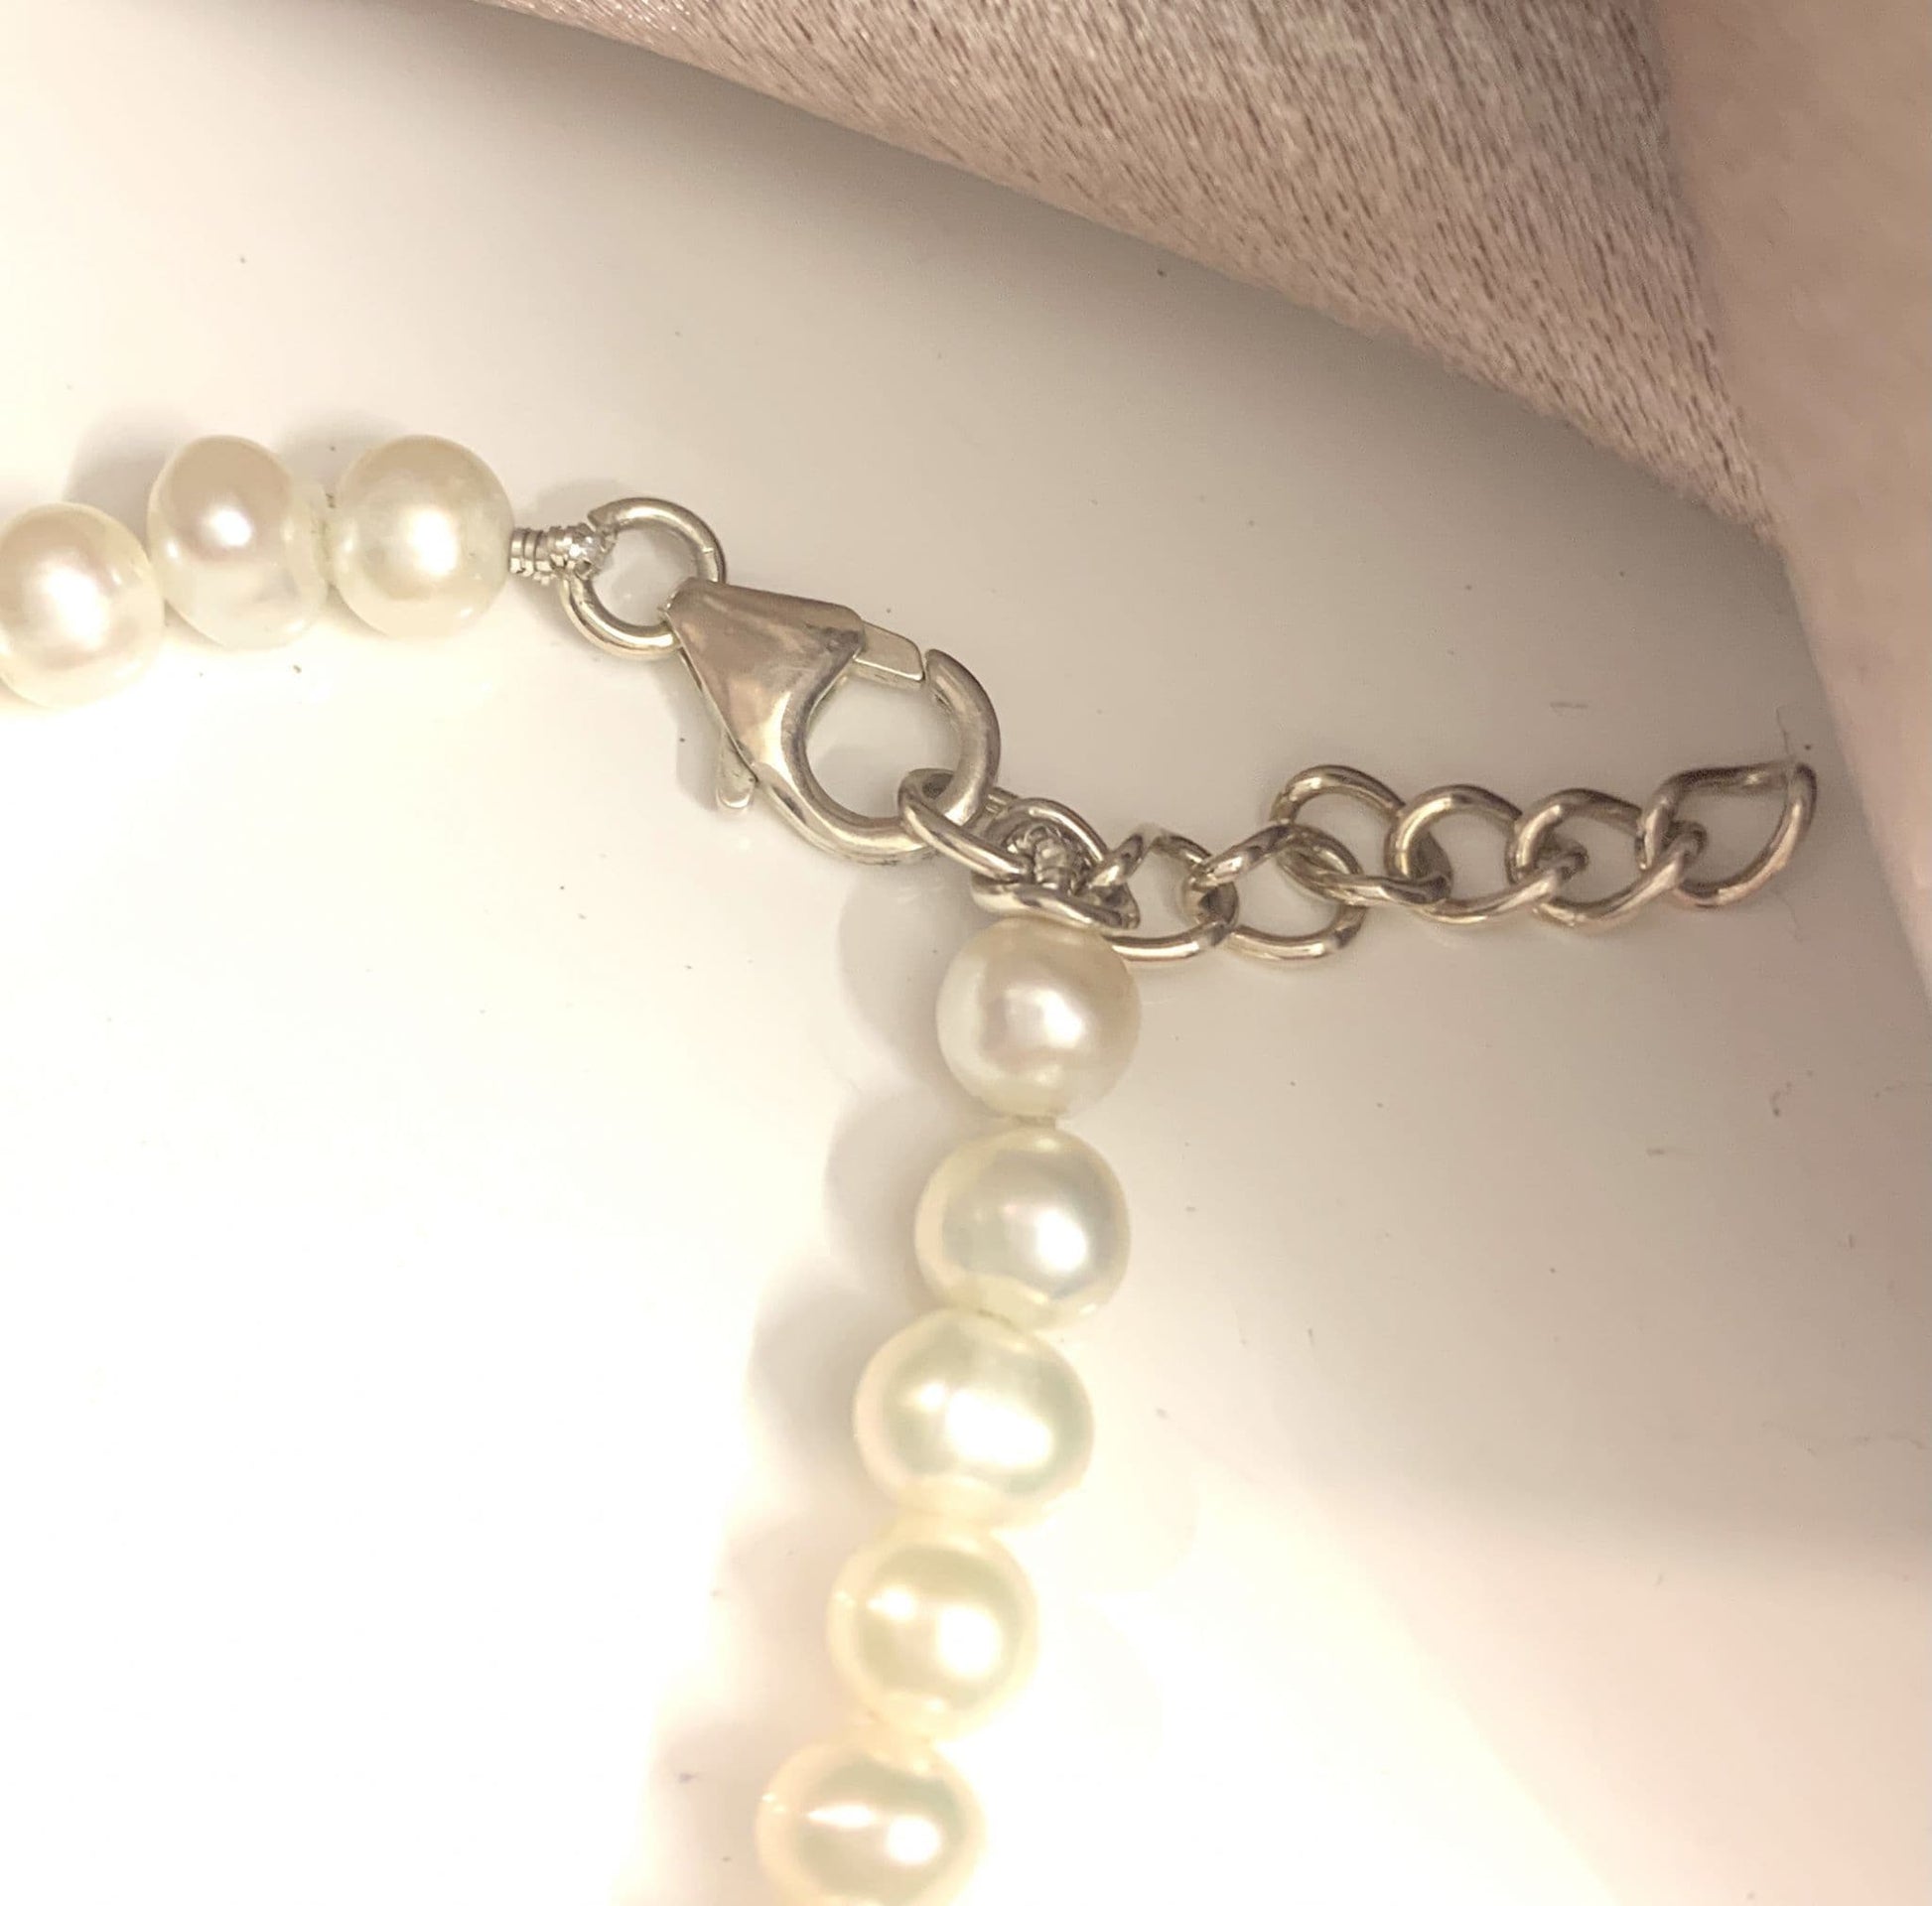 Freshwater round pearl bracelet